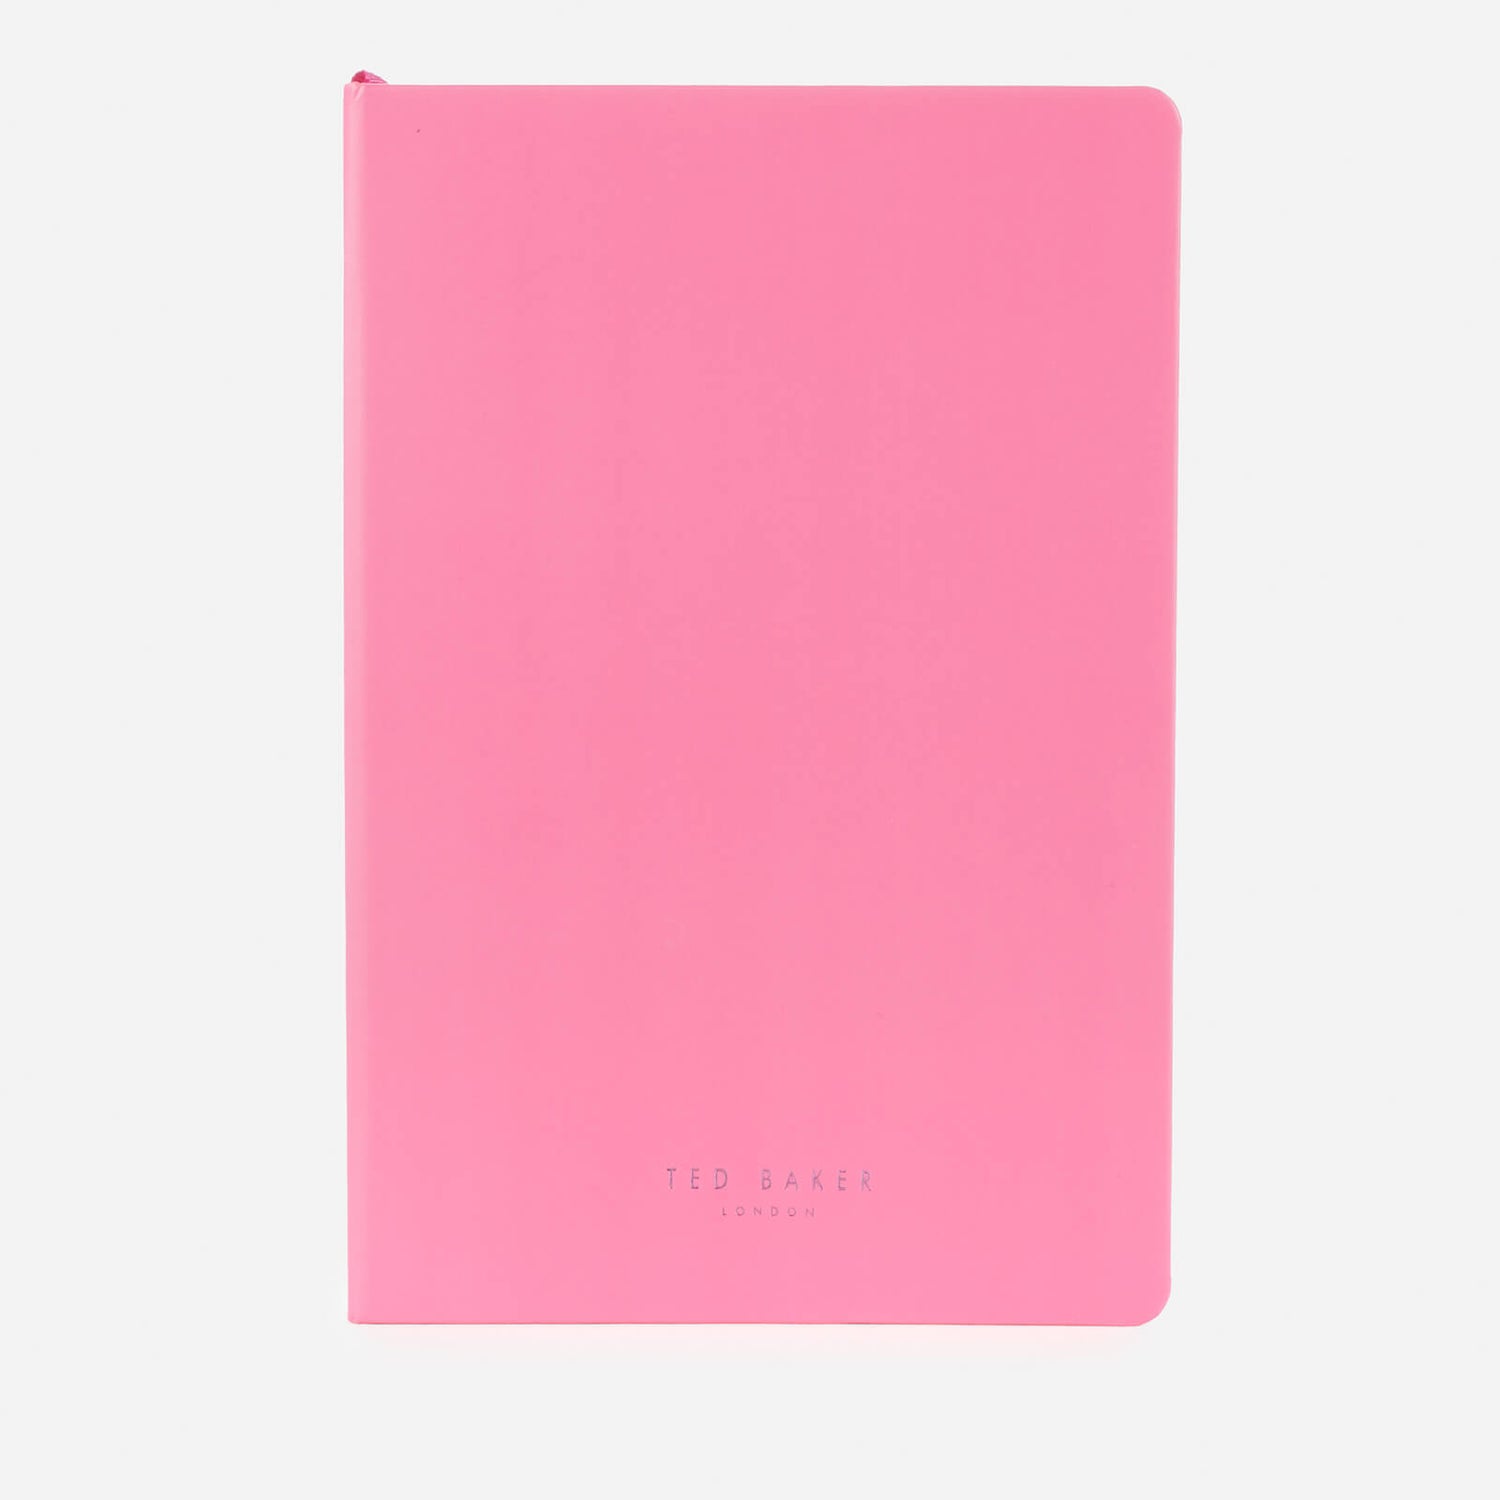 Ted Baker A5 Notebook - Pink Plain